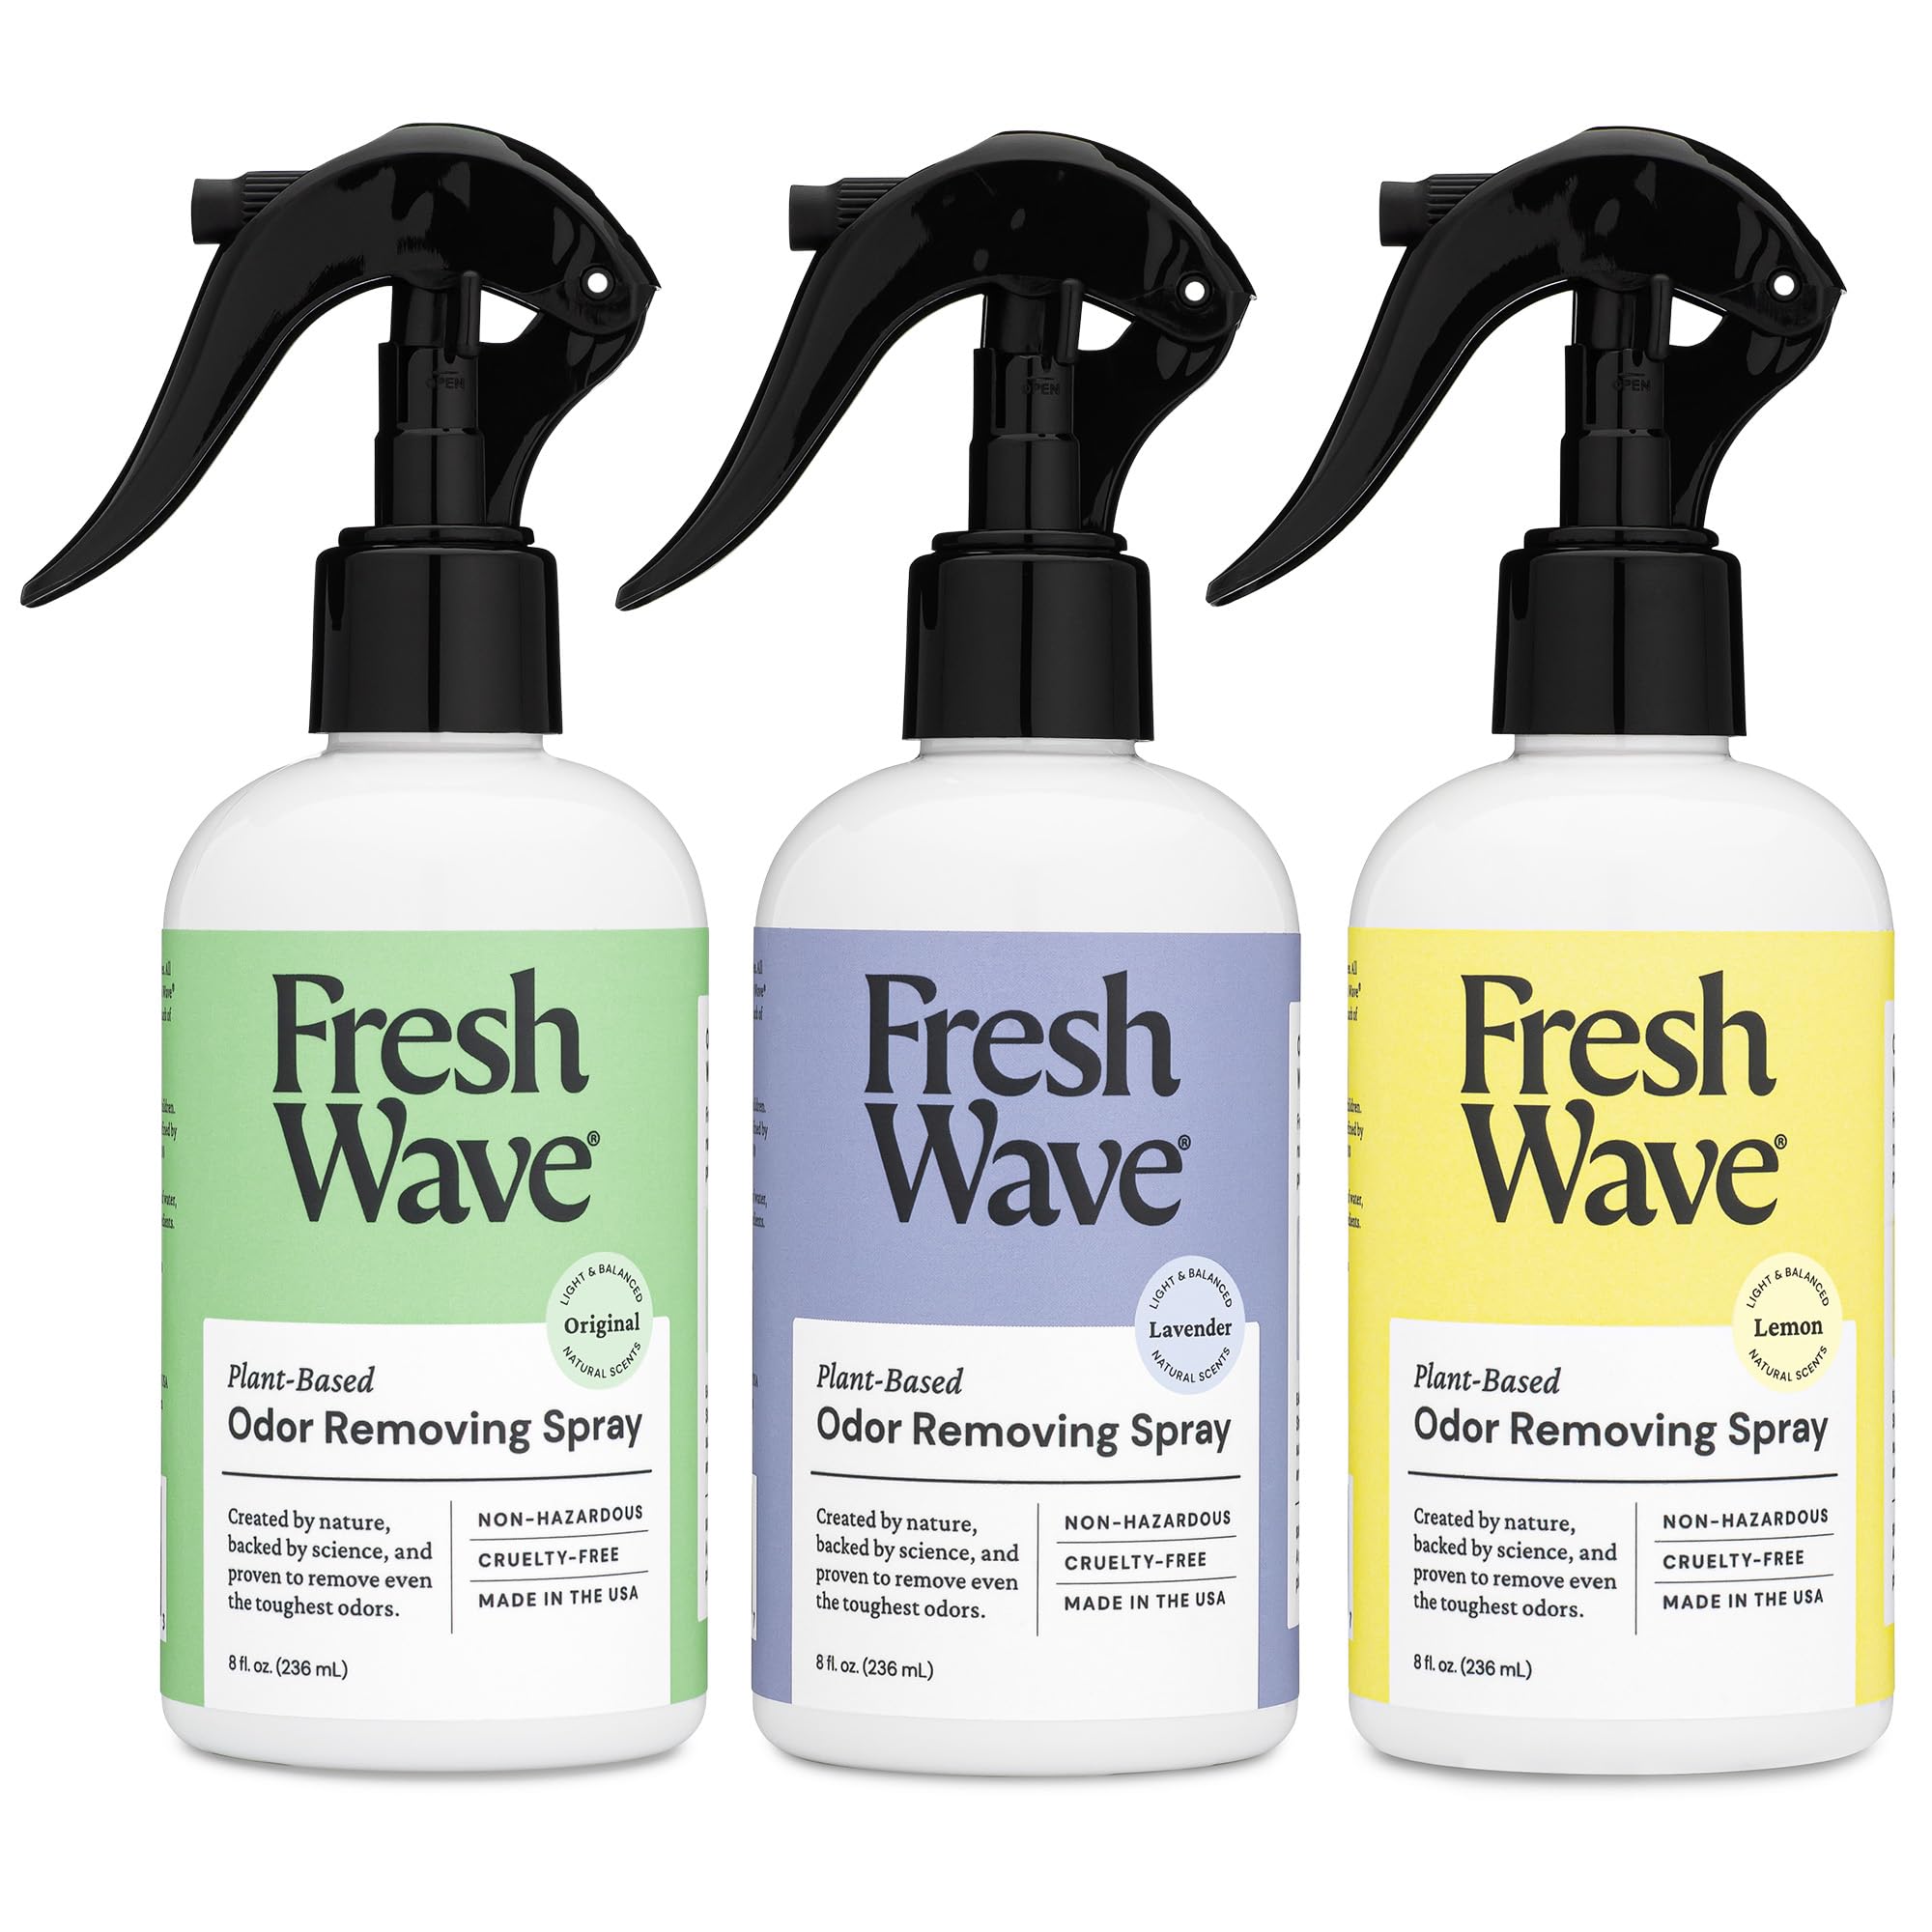 Fresh Wave Odor Removing Sprays Bundle: (3) 8 fl. oz. Sprays - Lavender, Lemon, Original